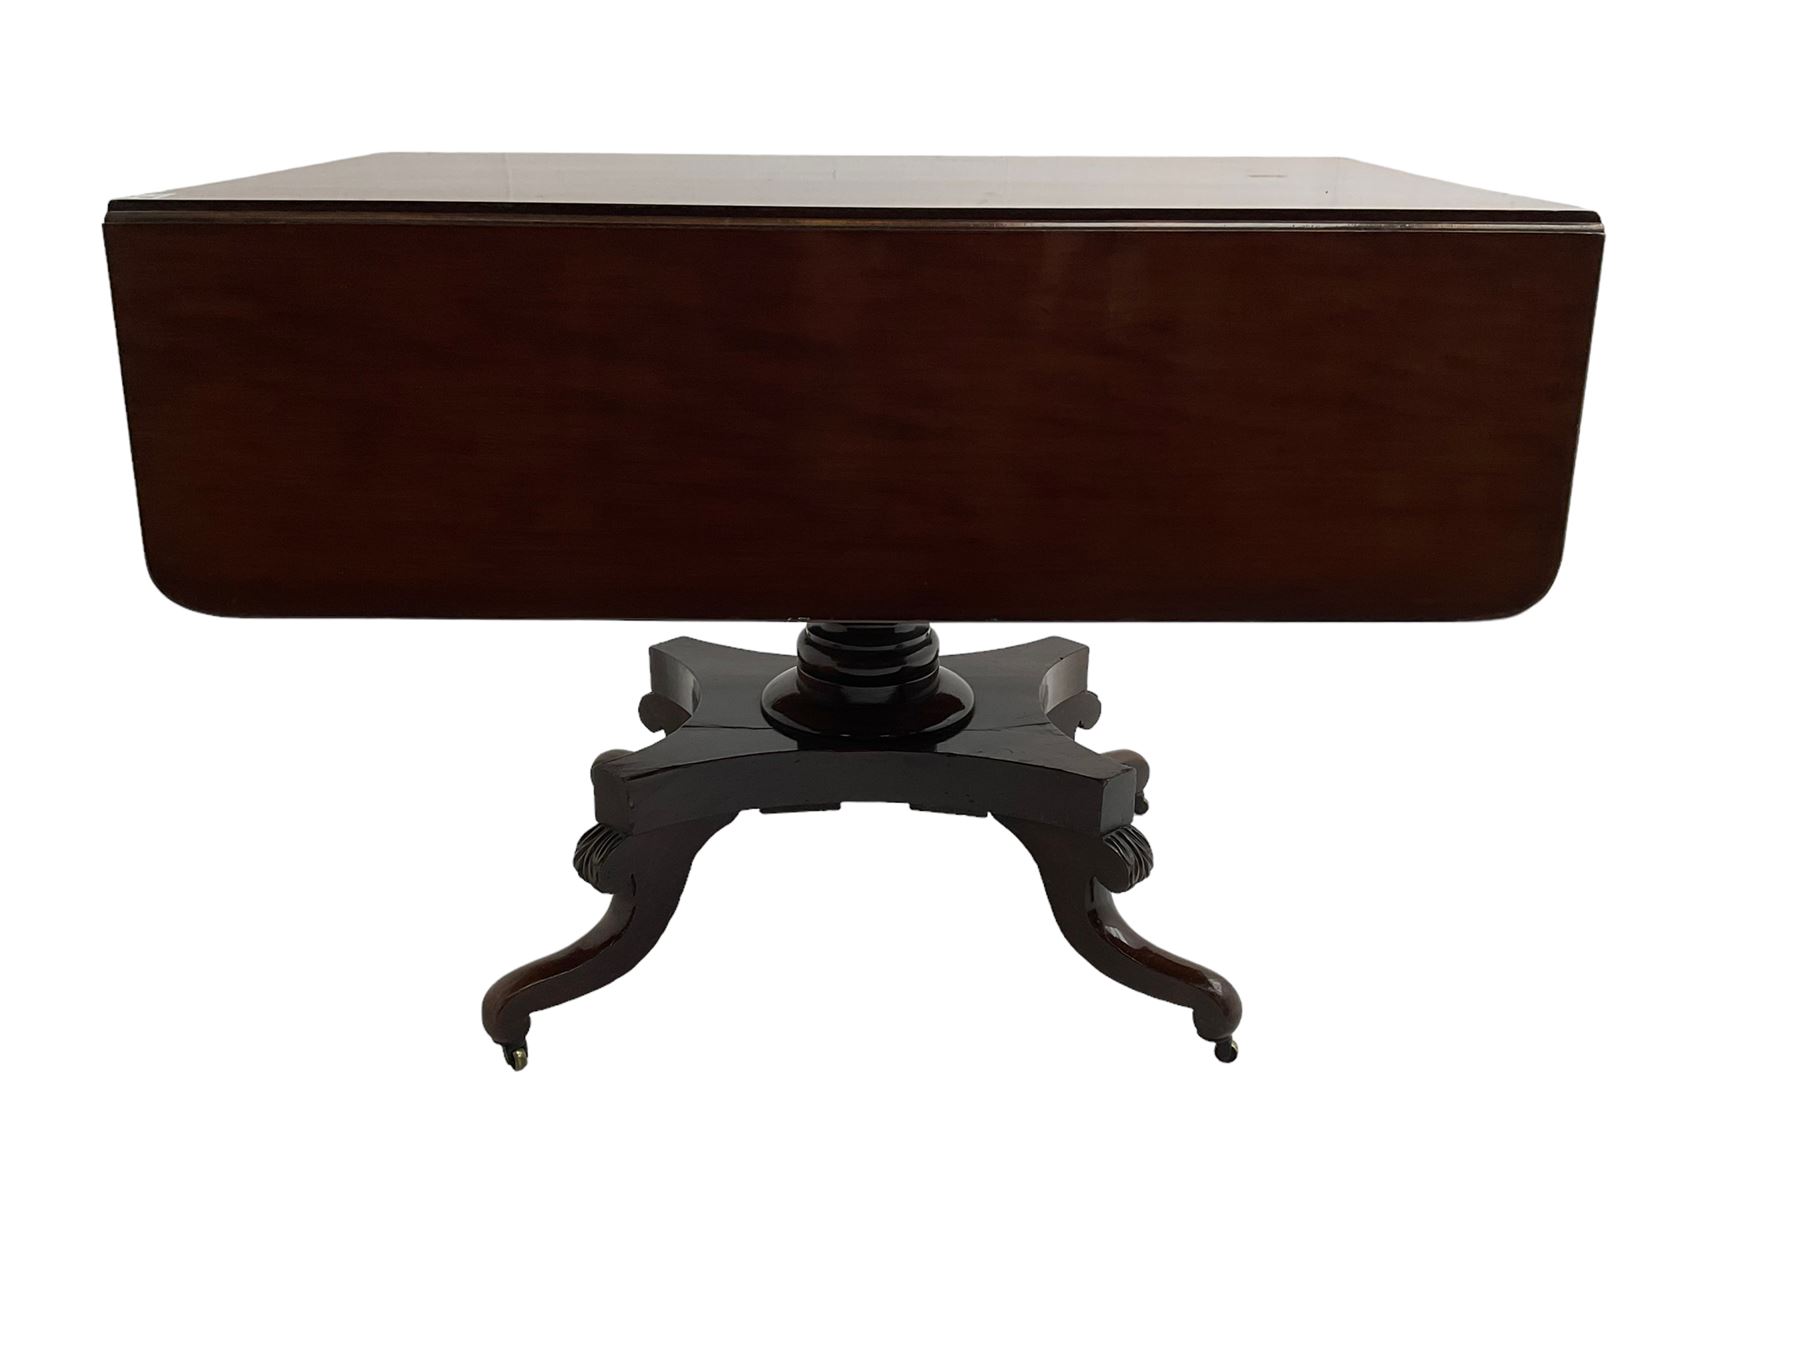 19th century mahogany drop leaf pedestal table - Image 3 of 7